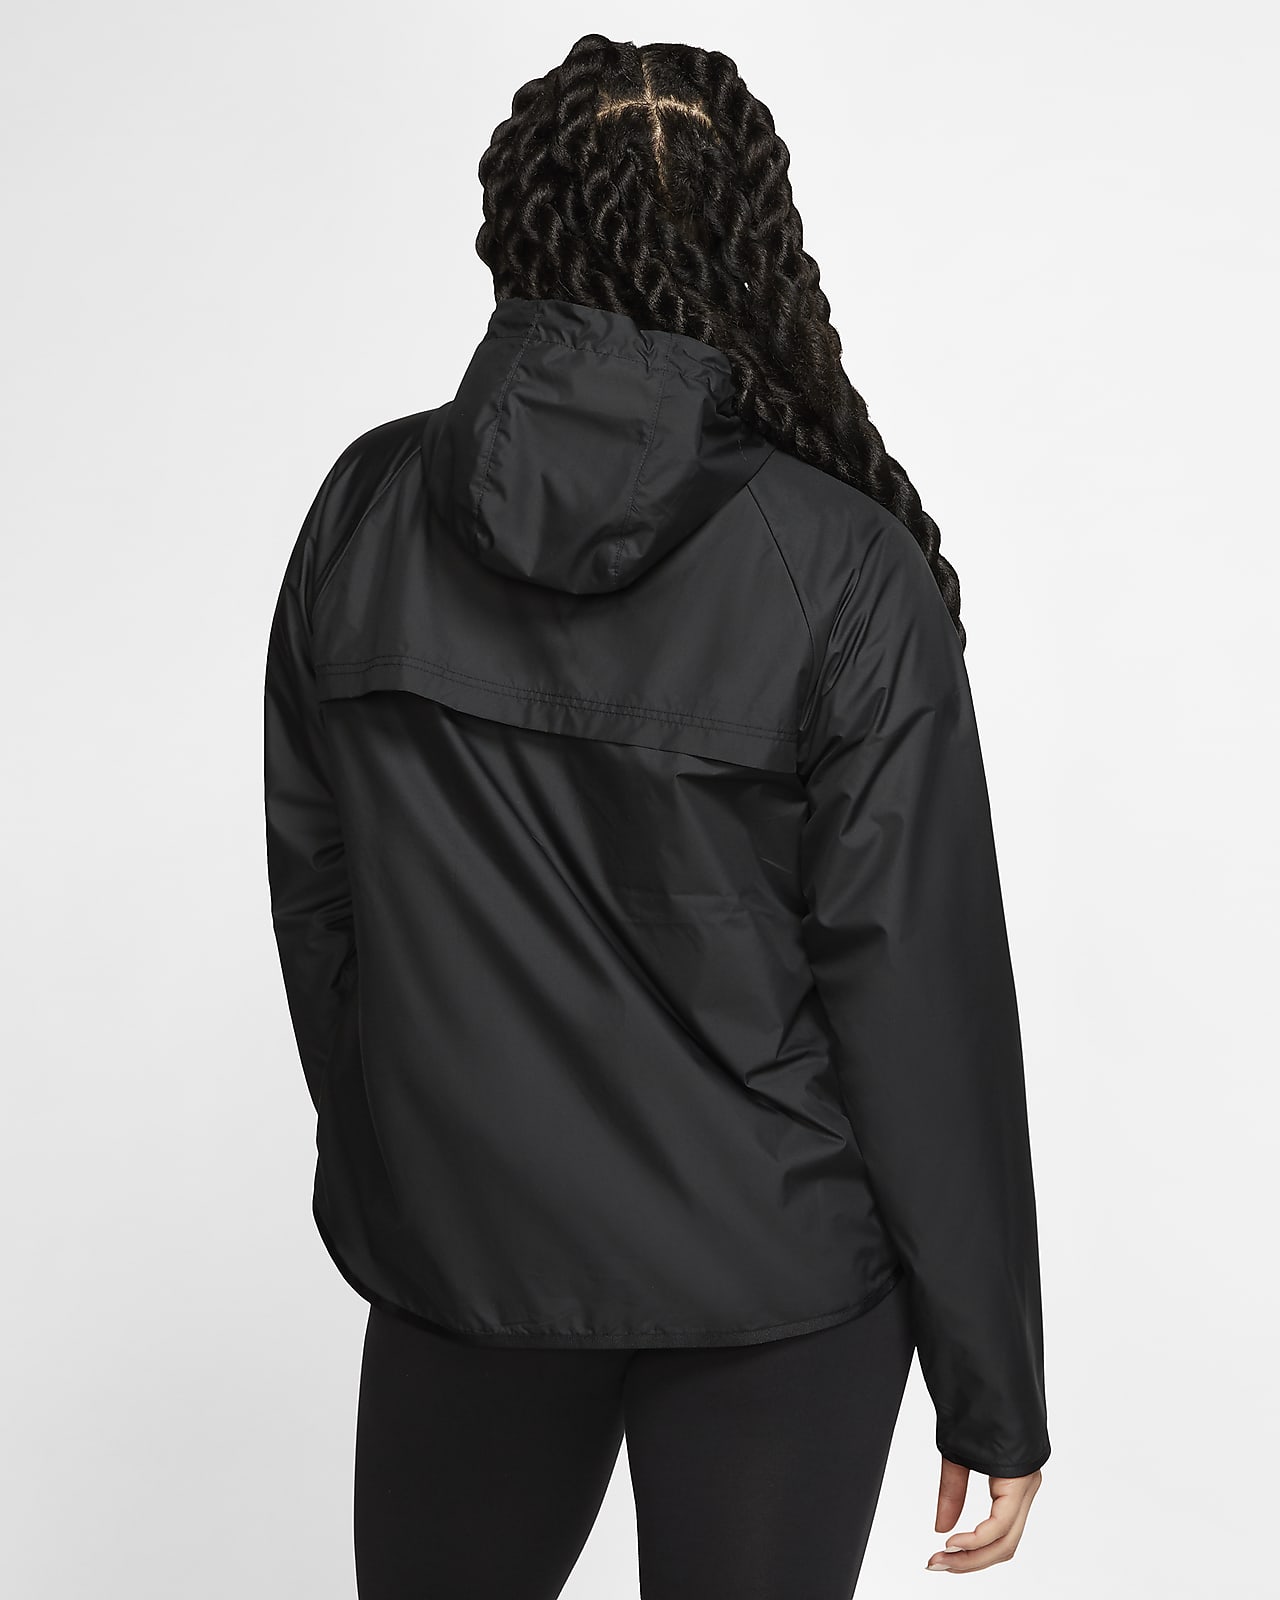 nike women's windrunner jacket sale